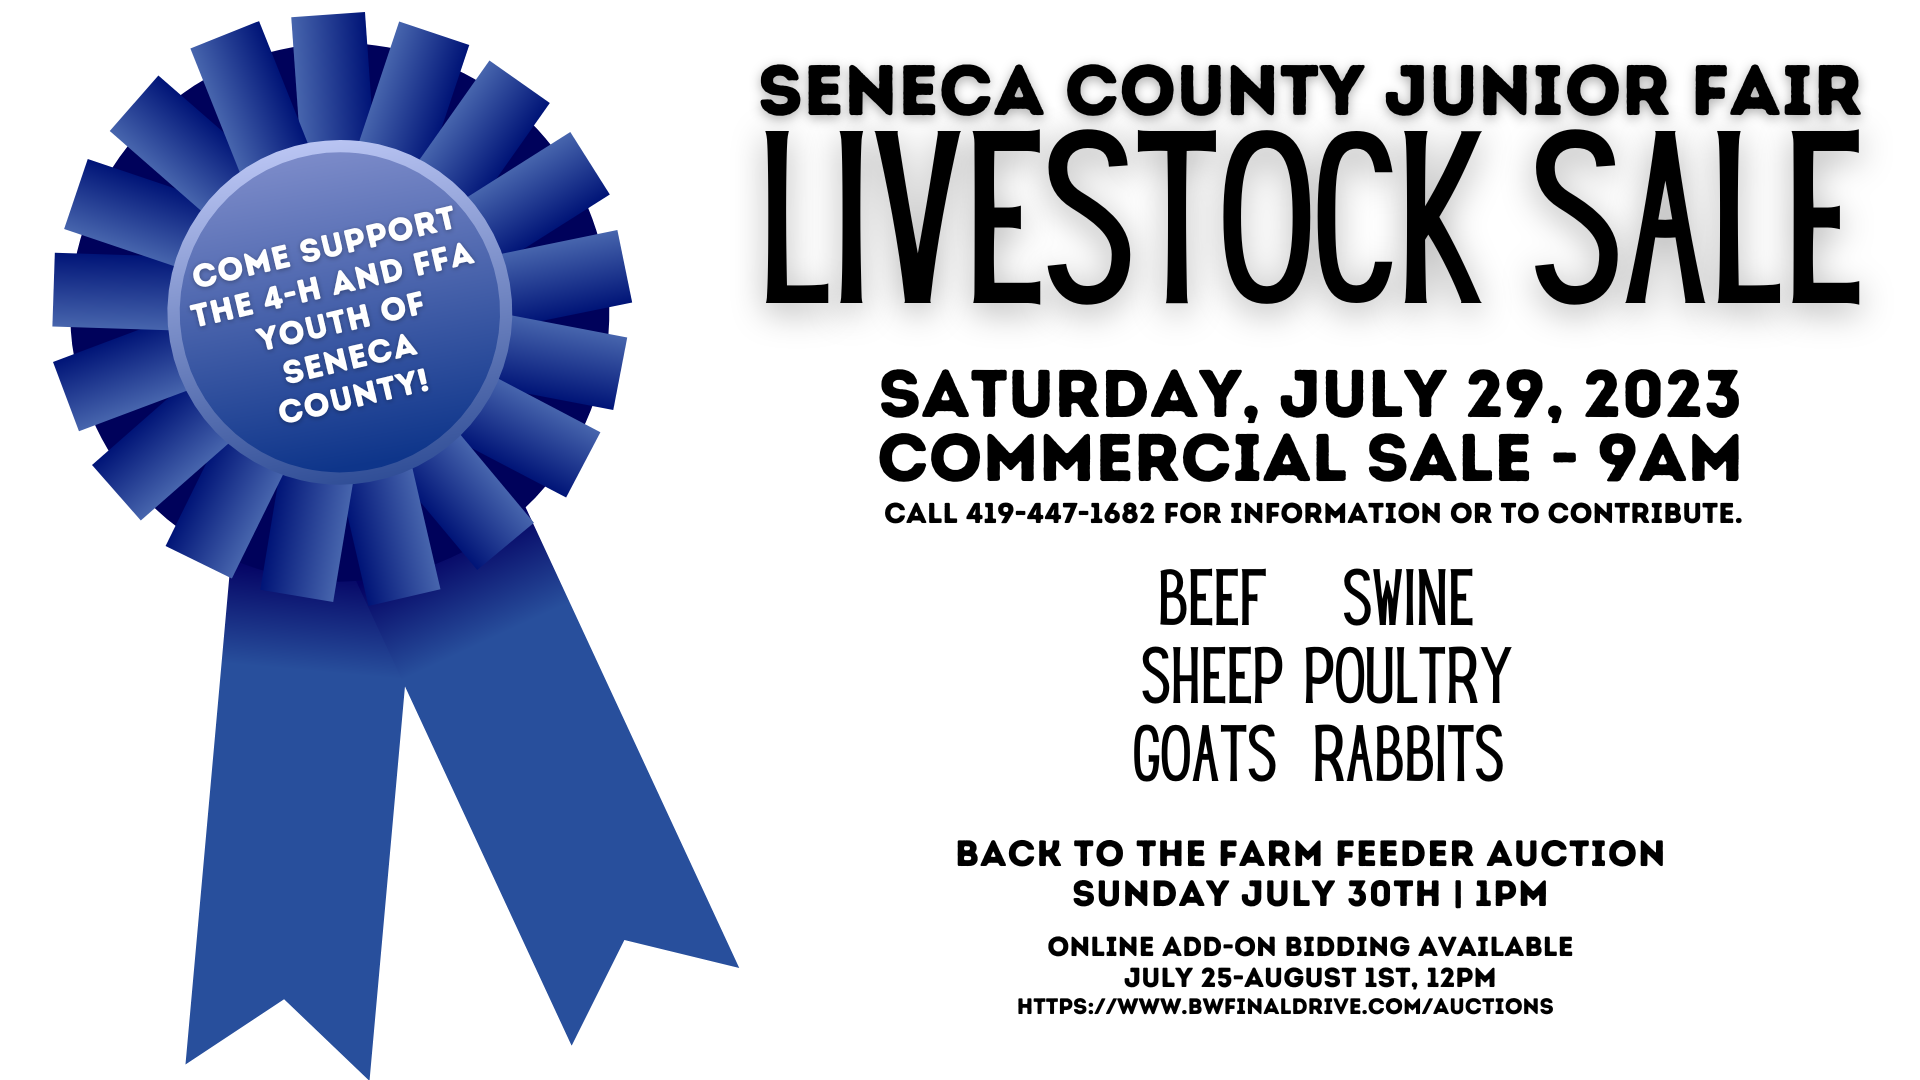 Seneca County Junior Fair Back to the Farm Feeder Auction